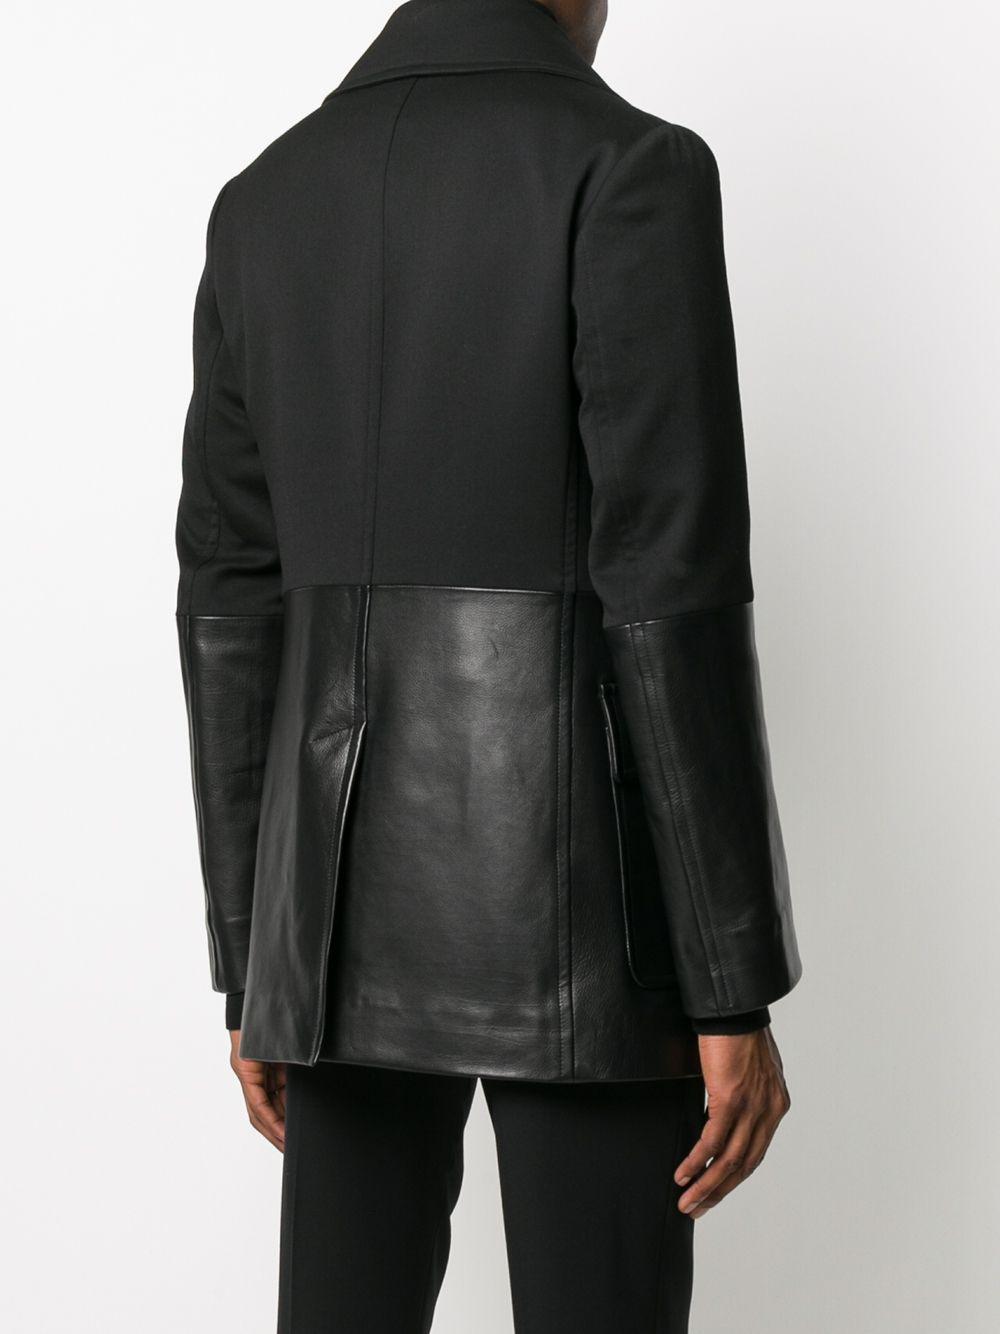 Alexander McQueen Wool Double-breasted Coat in Black for Men - Lyst